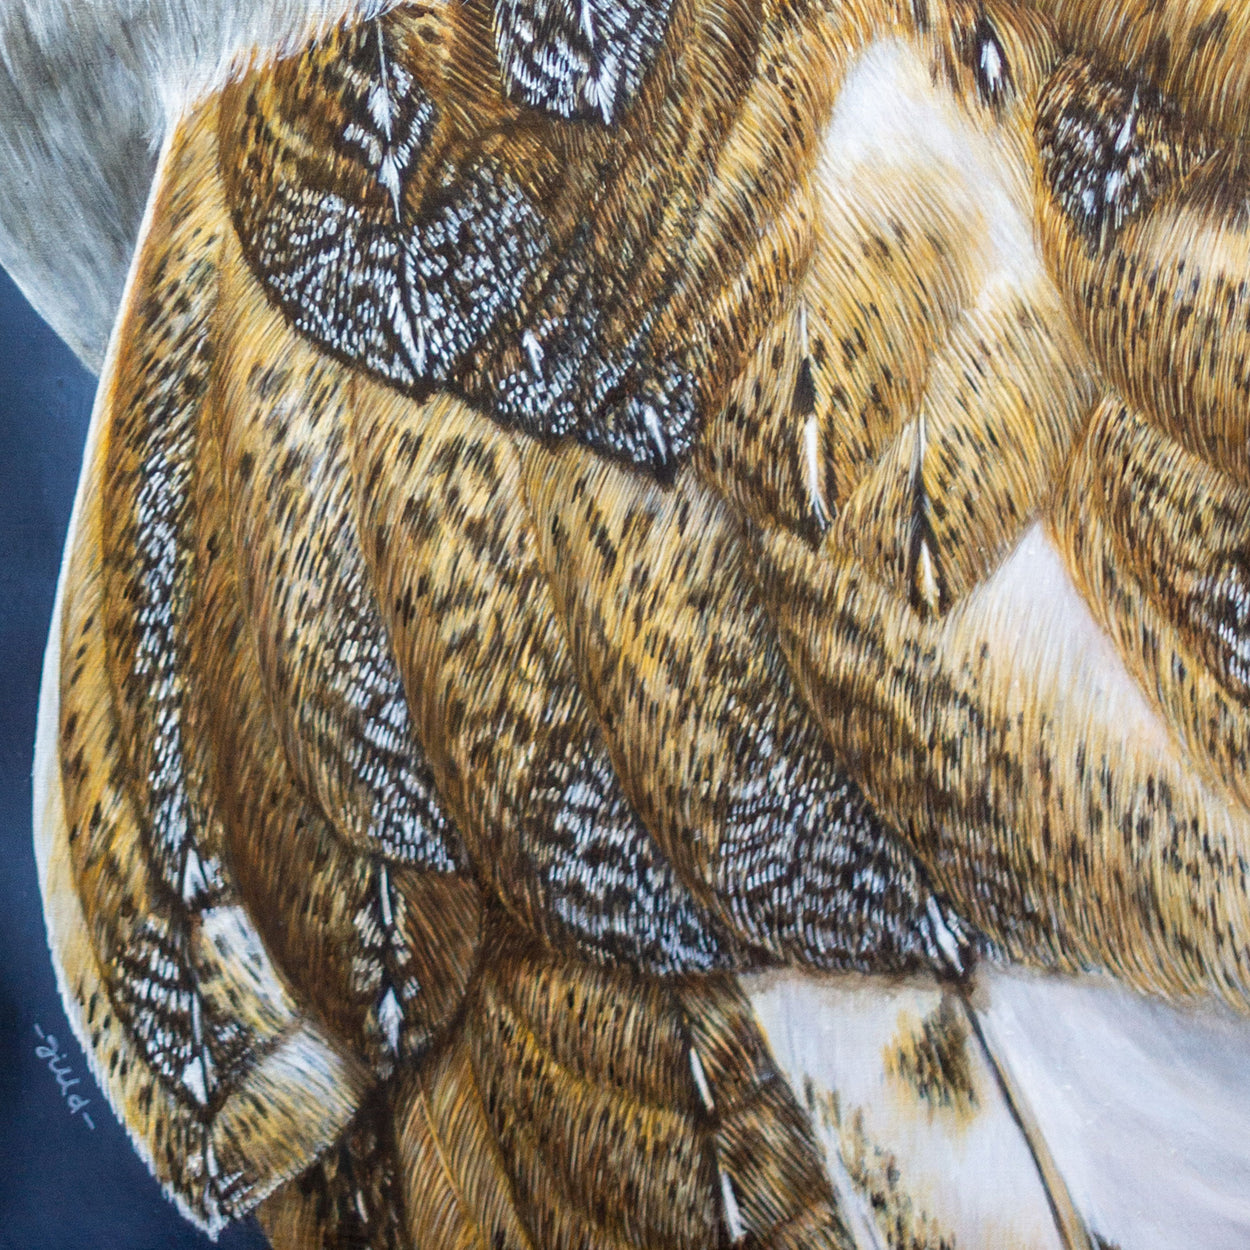 Barn Owl Portrait Painting Close-up 4 - Jill Dimond